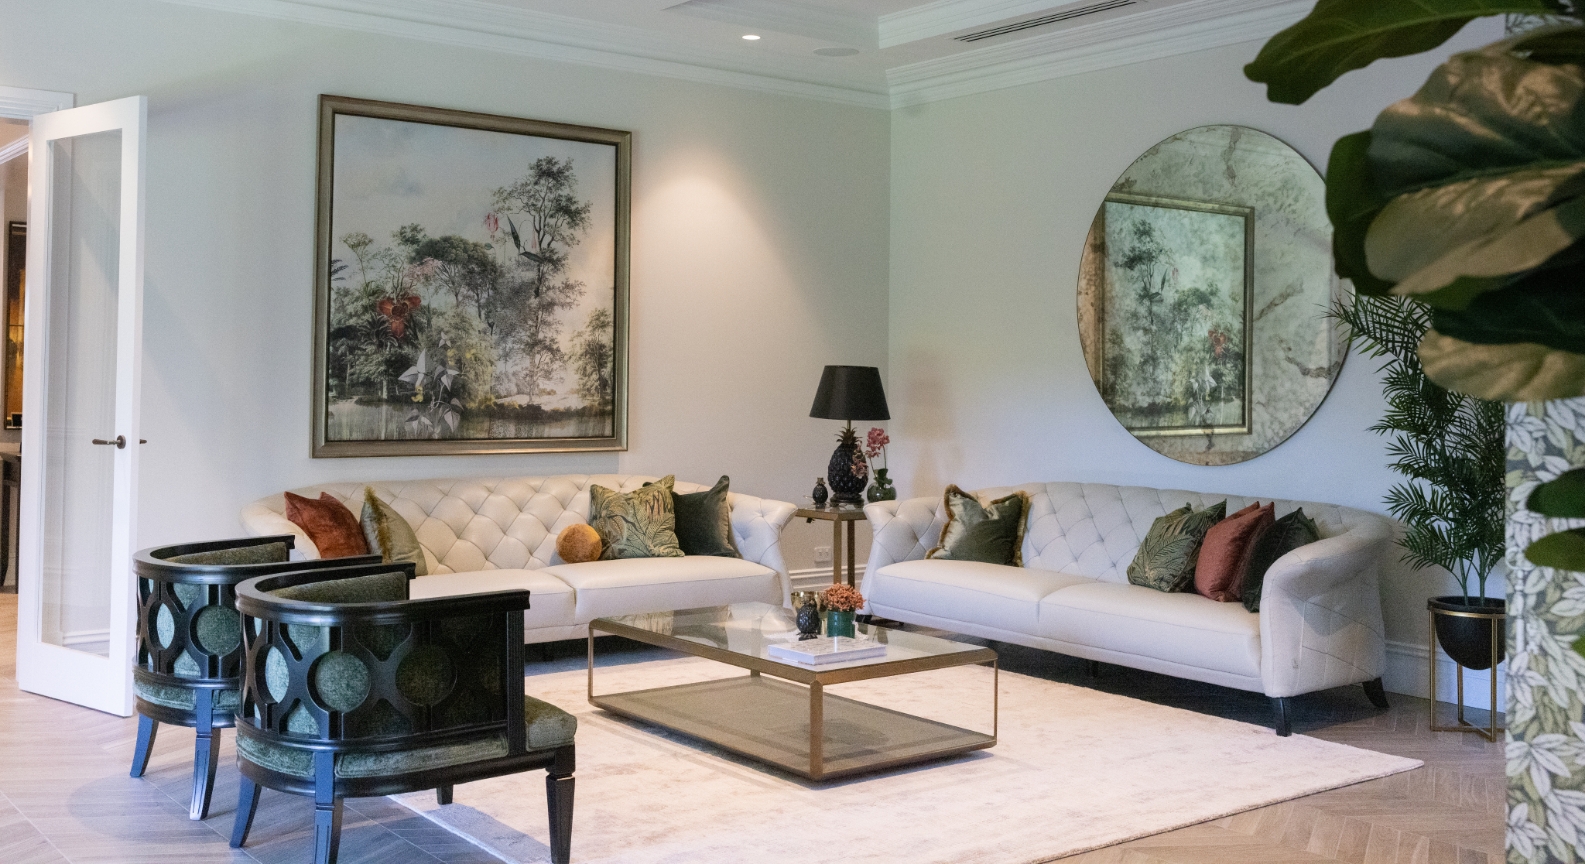 Elegant living room with sofas, art, and decorative plants.